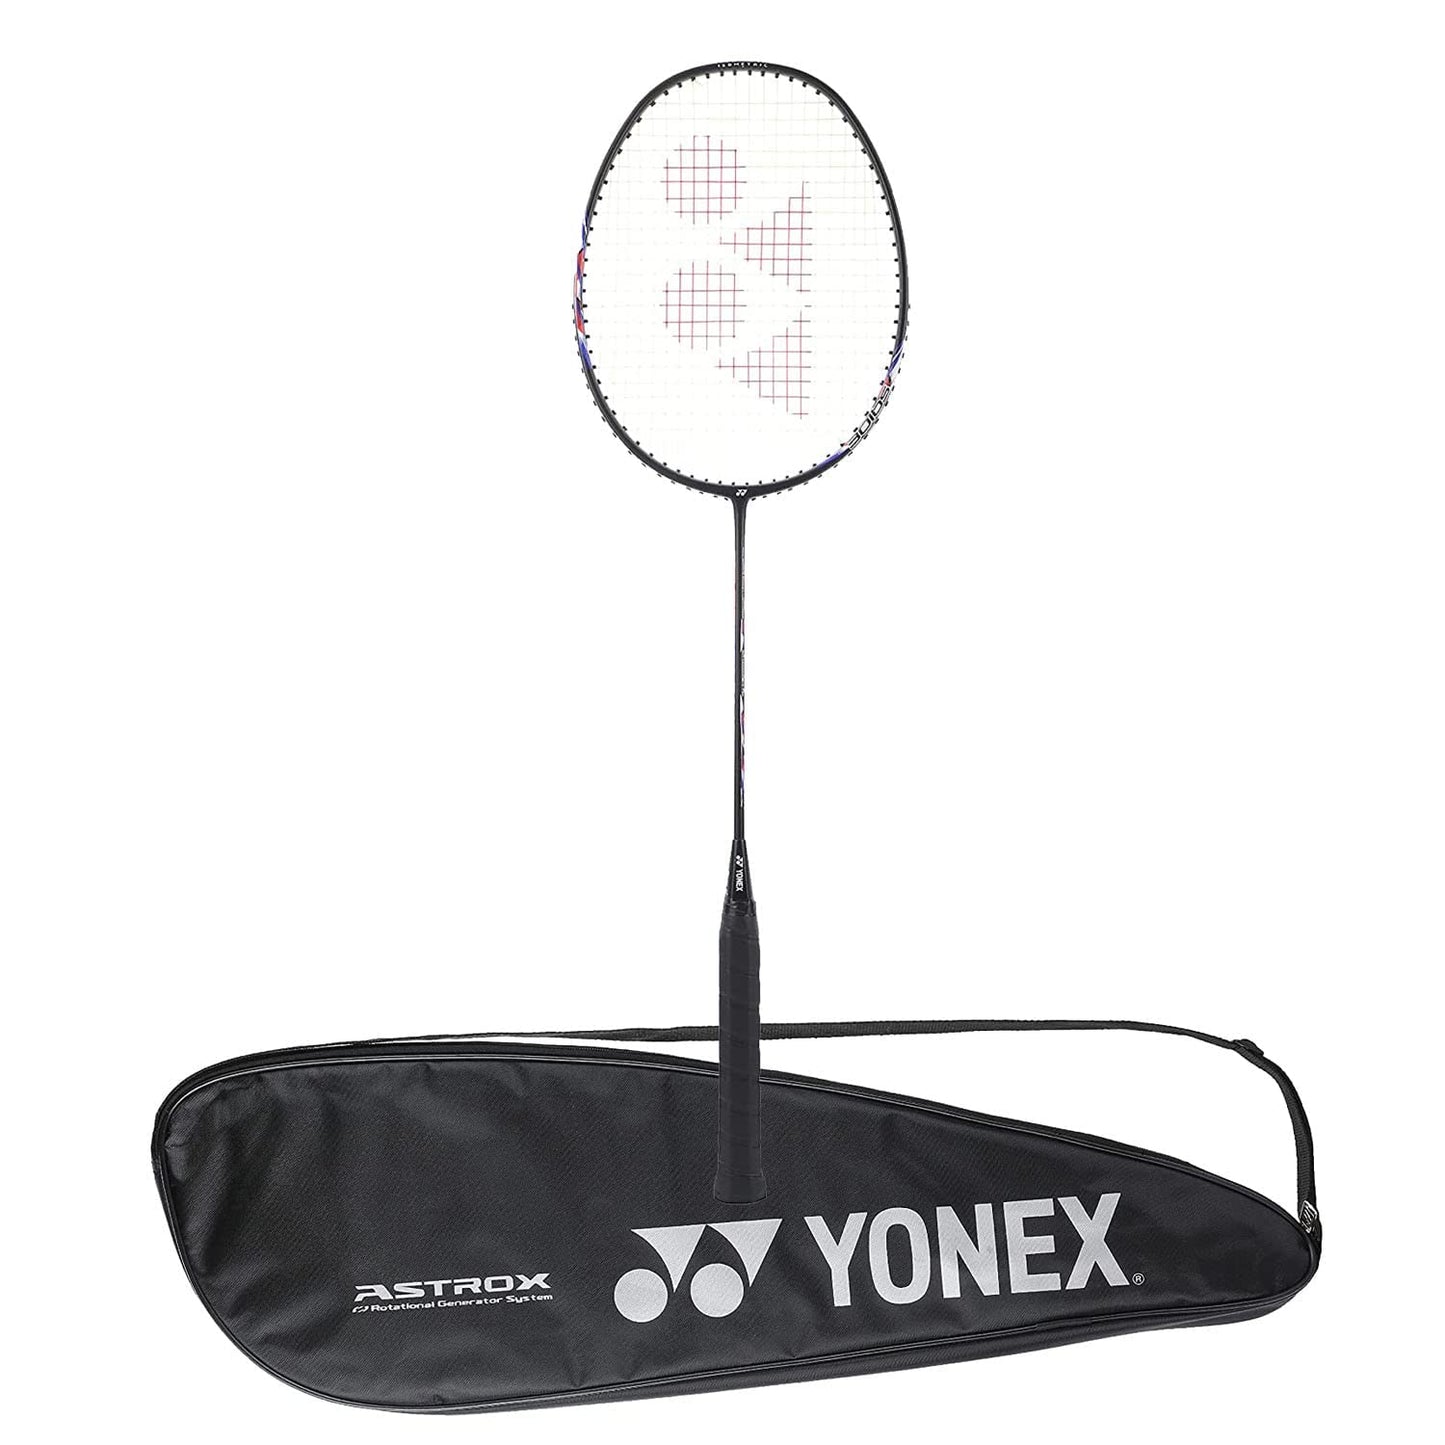 YONEX Badminton Racquet ASTROX LITE 21I-5U5, Black - Best Price online Prokicksports.com